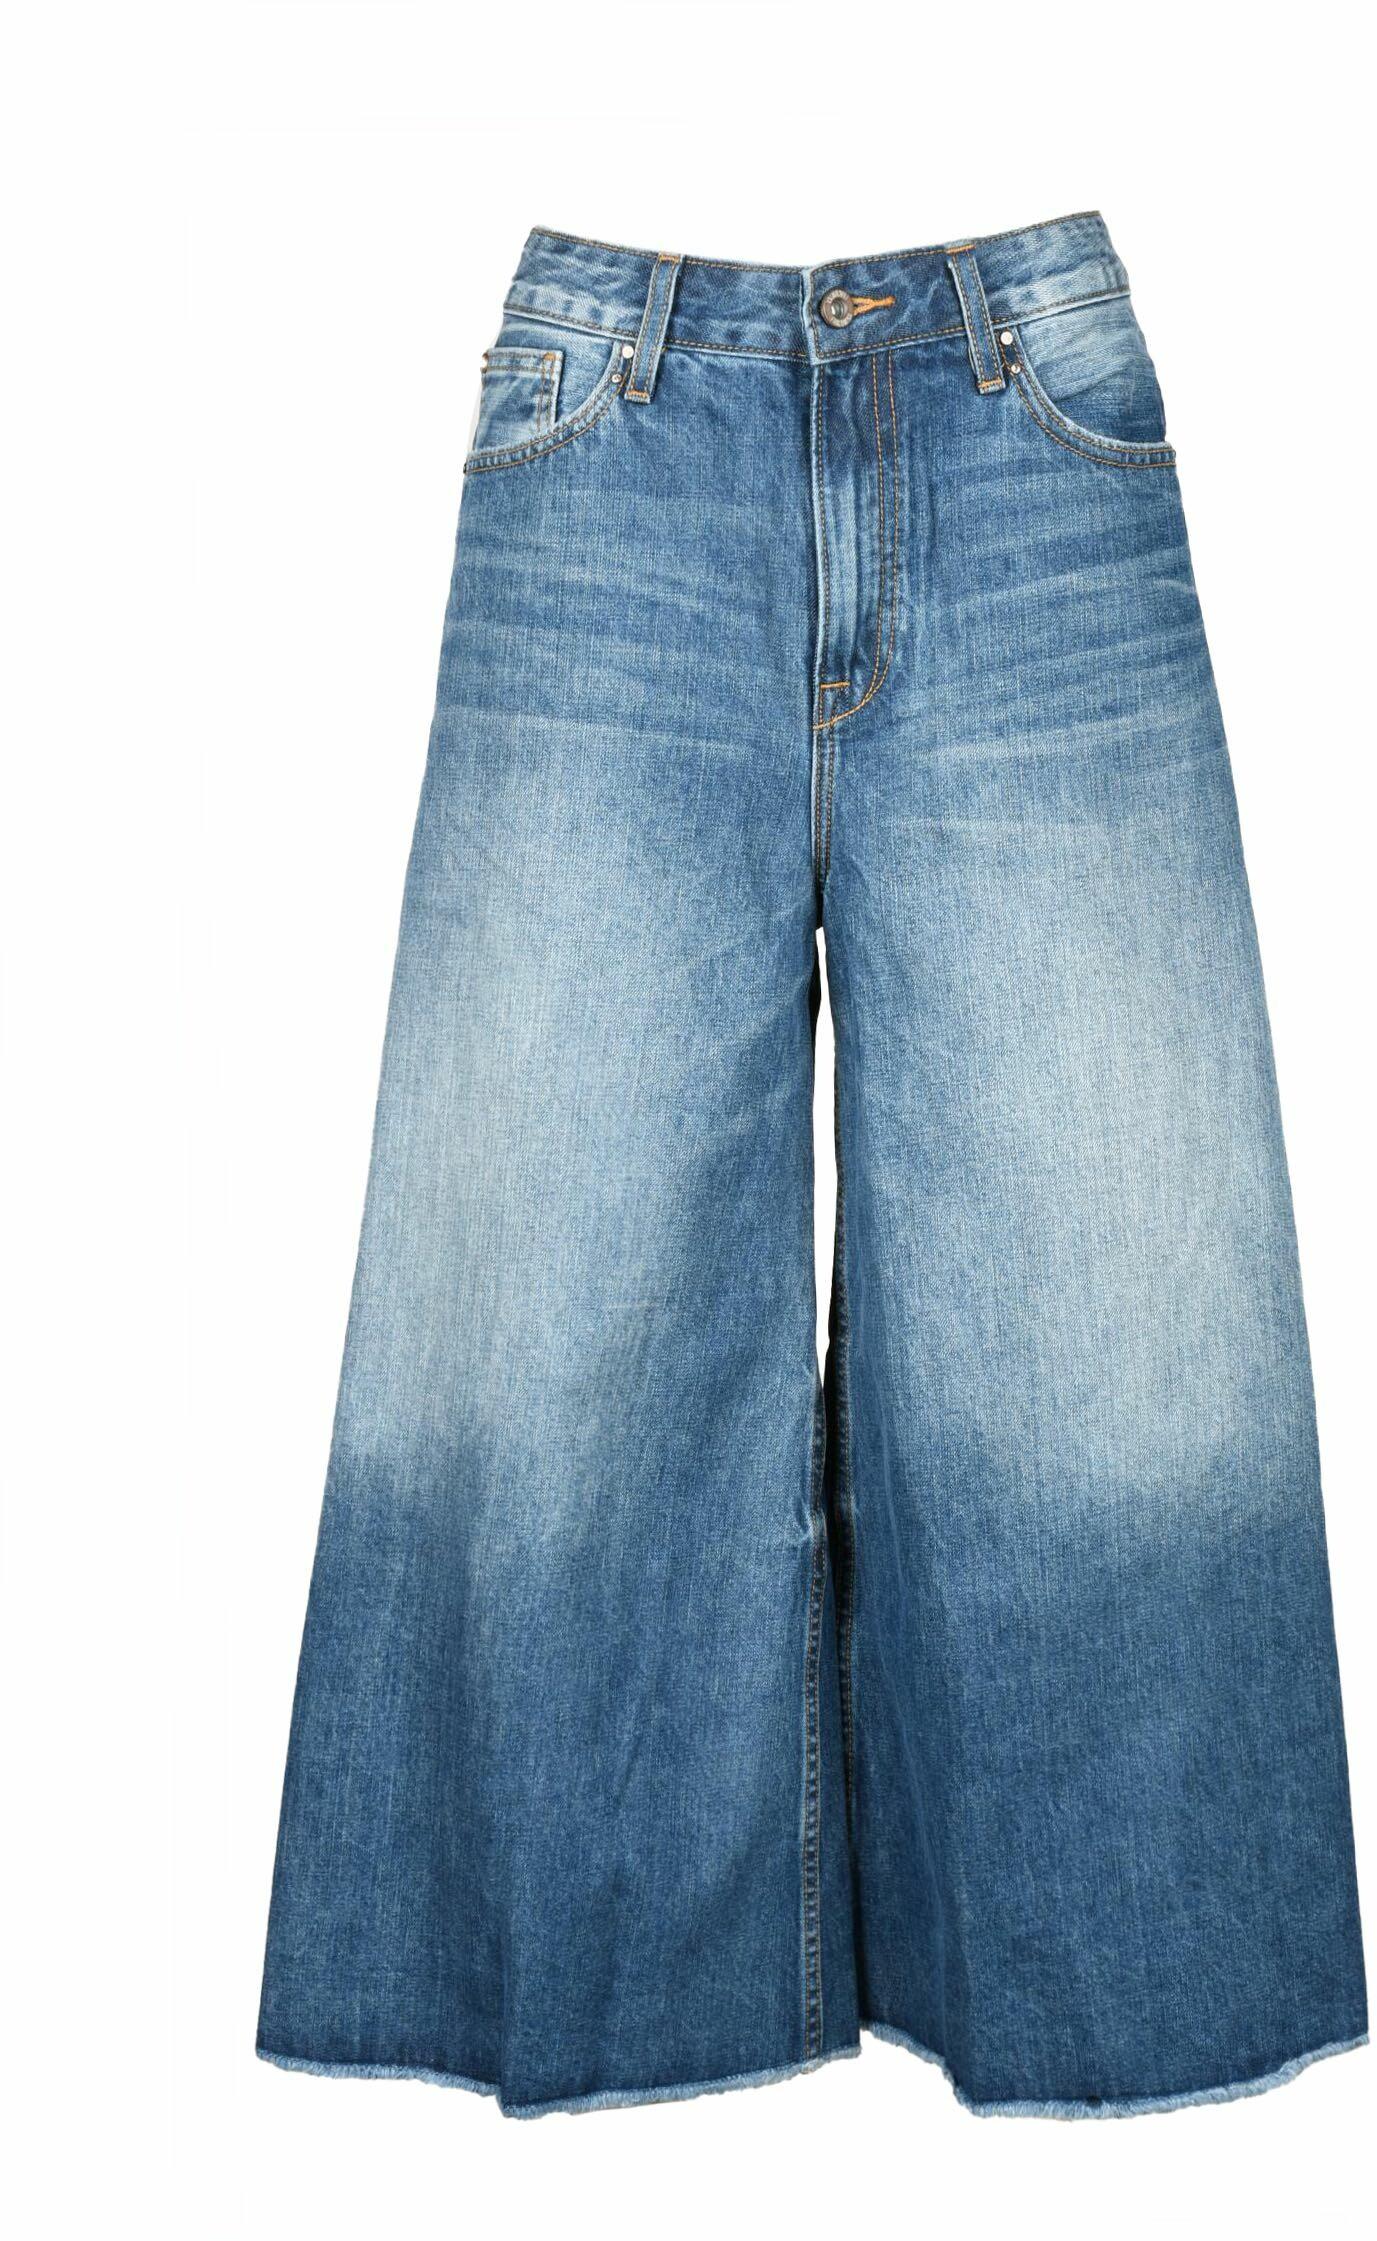 Fracomina Women's Blue Jeans 30 IT